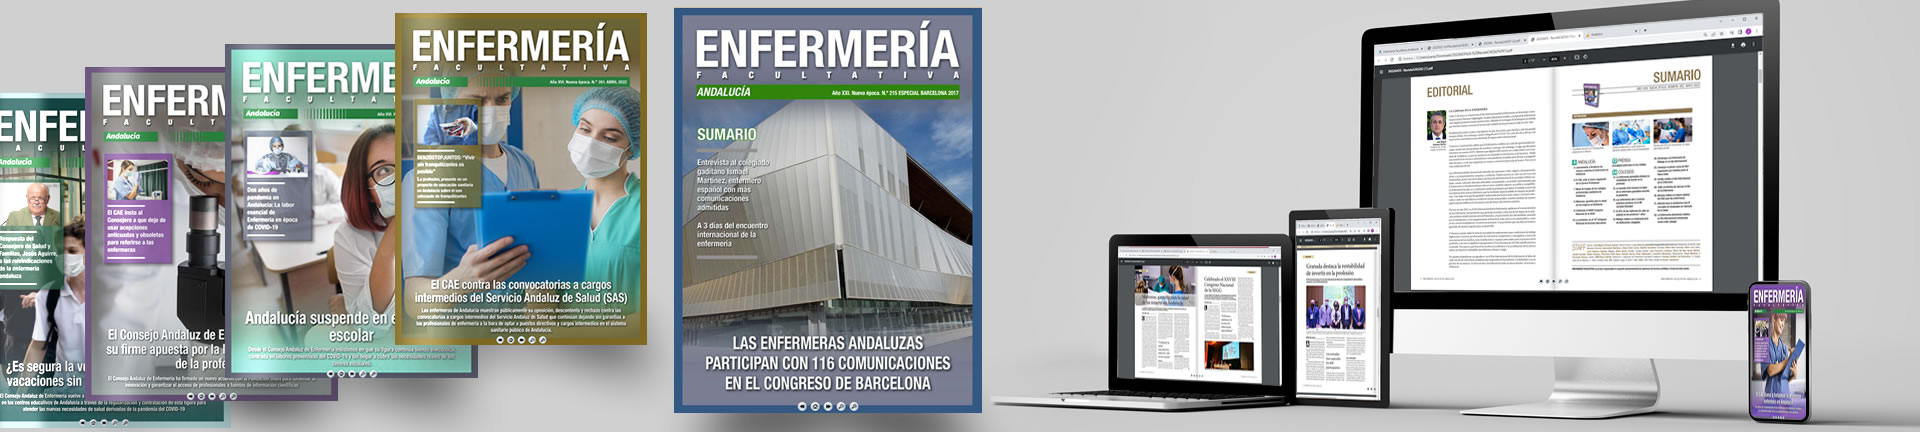 Consejo Andaluz de Colegios de Enfermería - CAE - Revista Enfermería Facultativa número 215 - Edición Andalucía